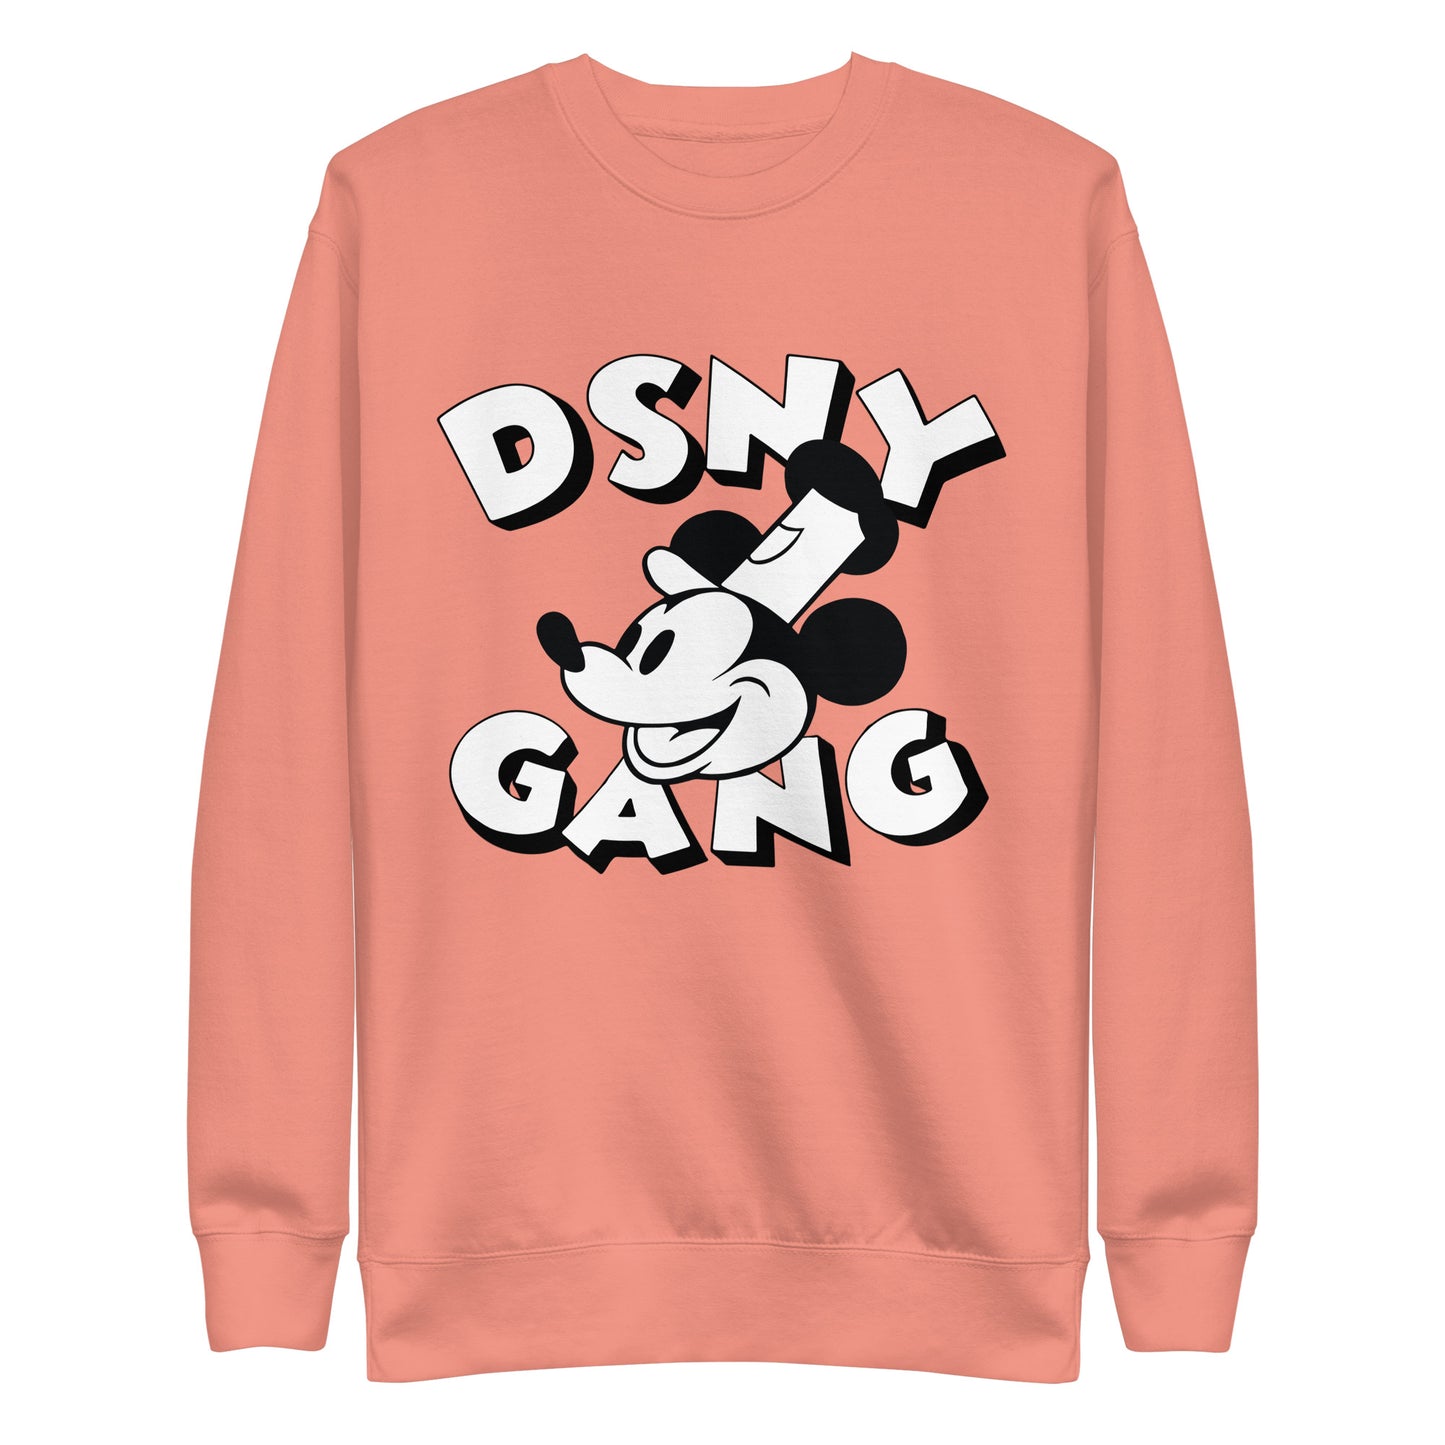 DSNY GANG Steamboat Willie Unisex Crewneck Sweatshirt